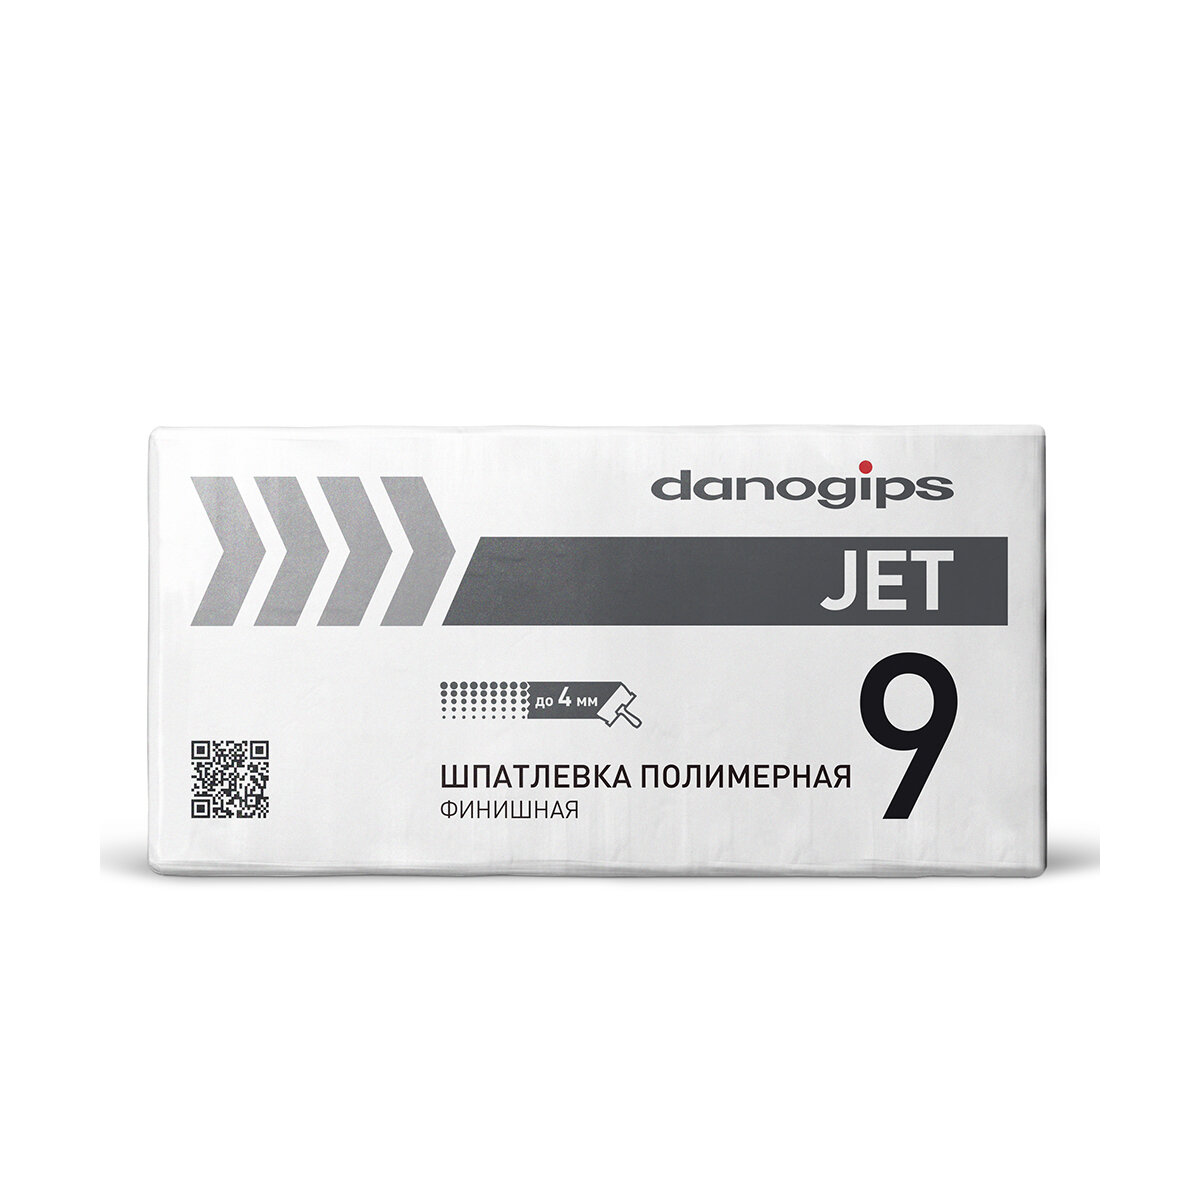    Danogips Jet 9, 20 